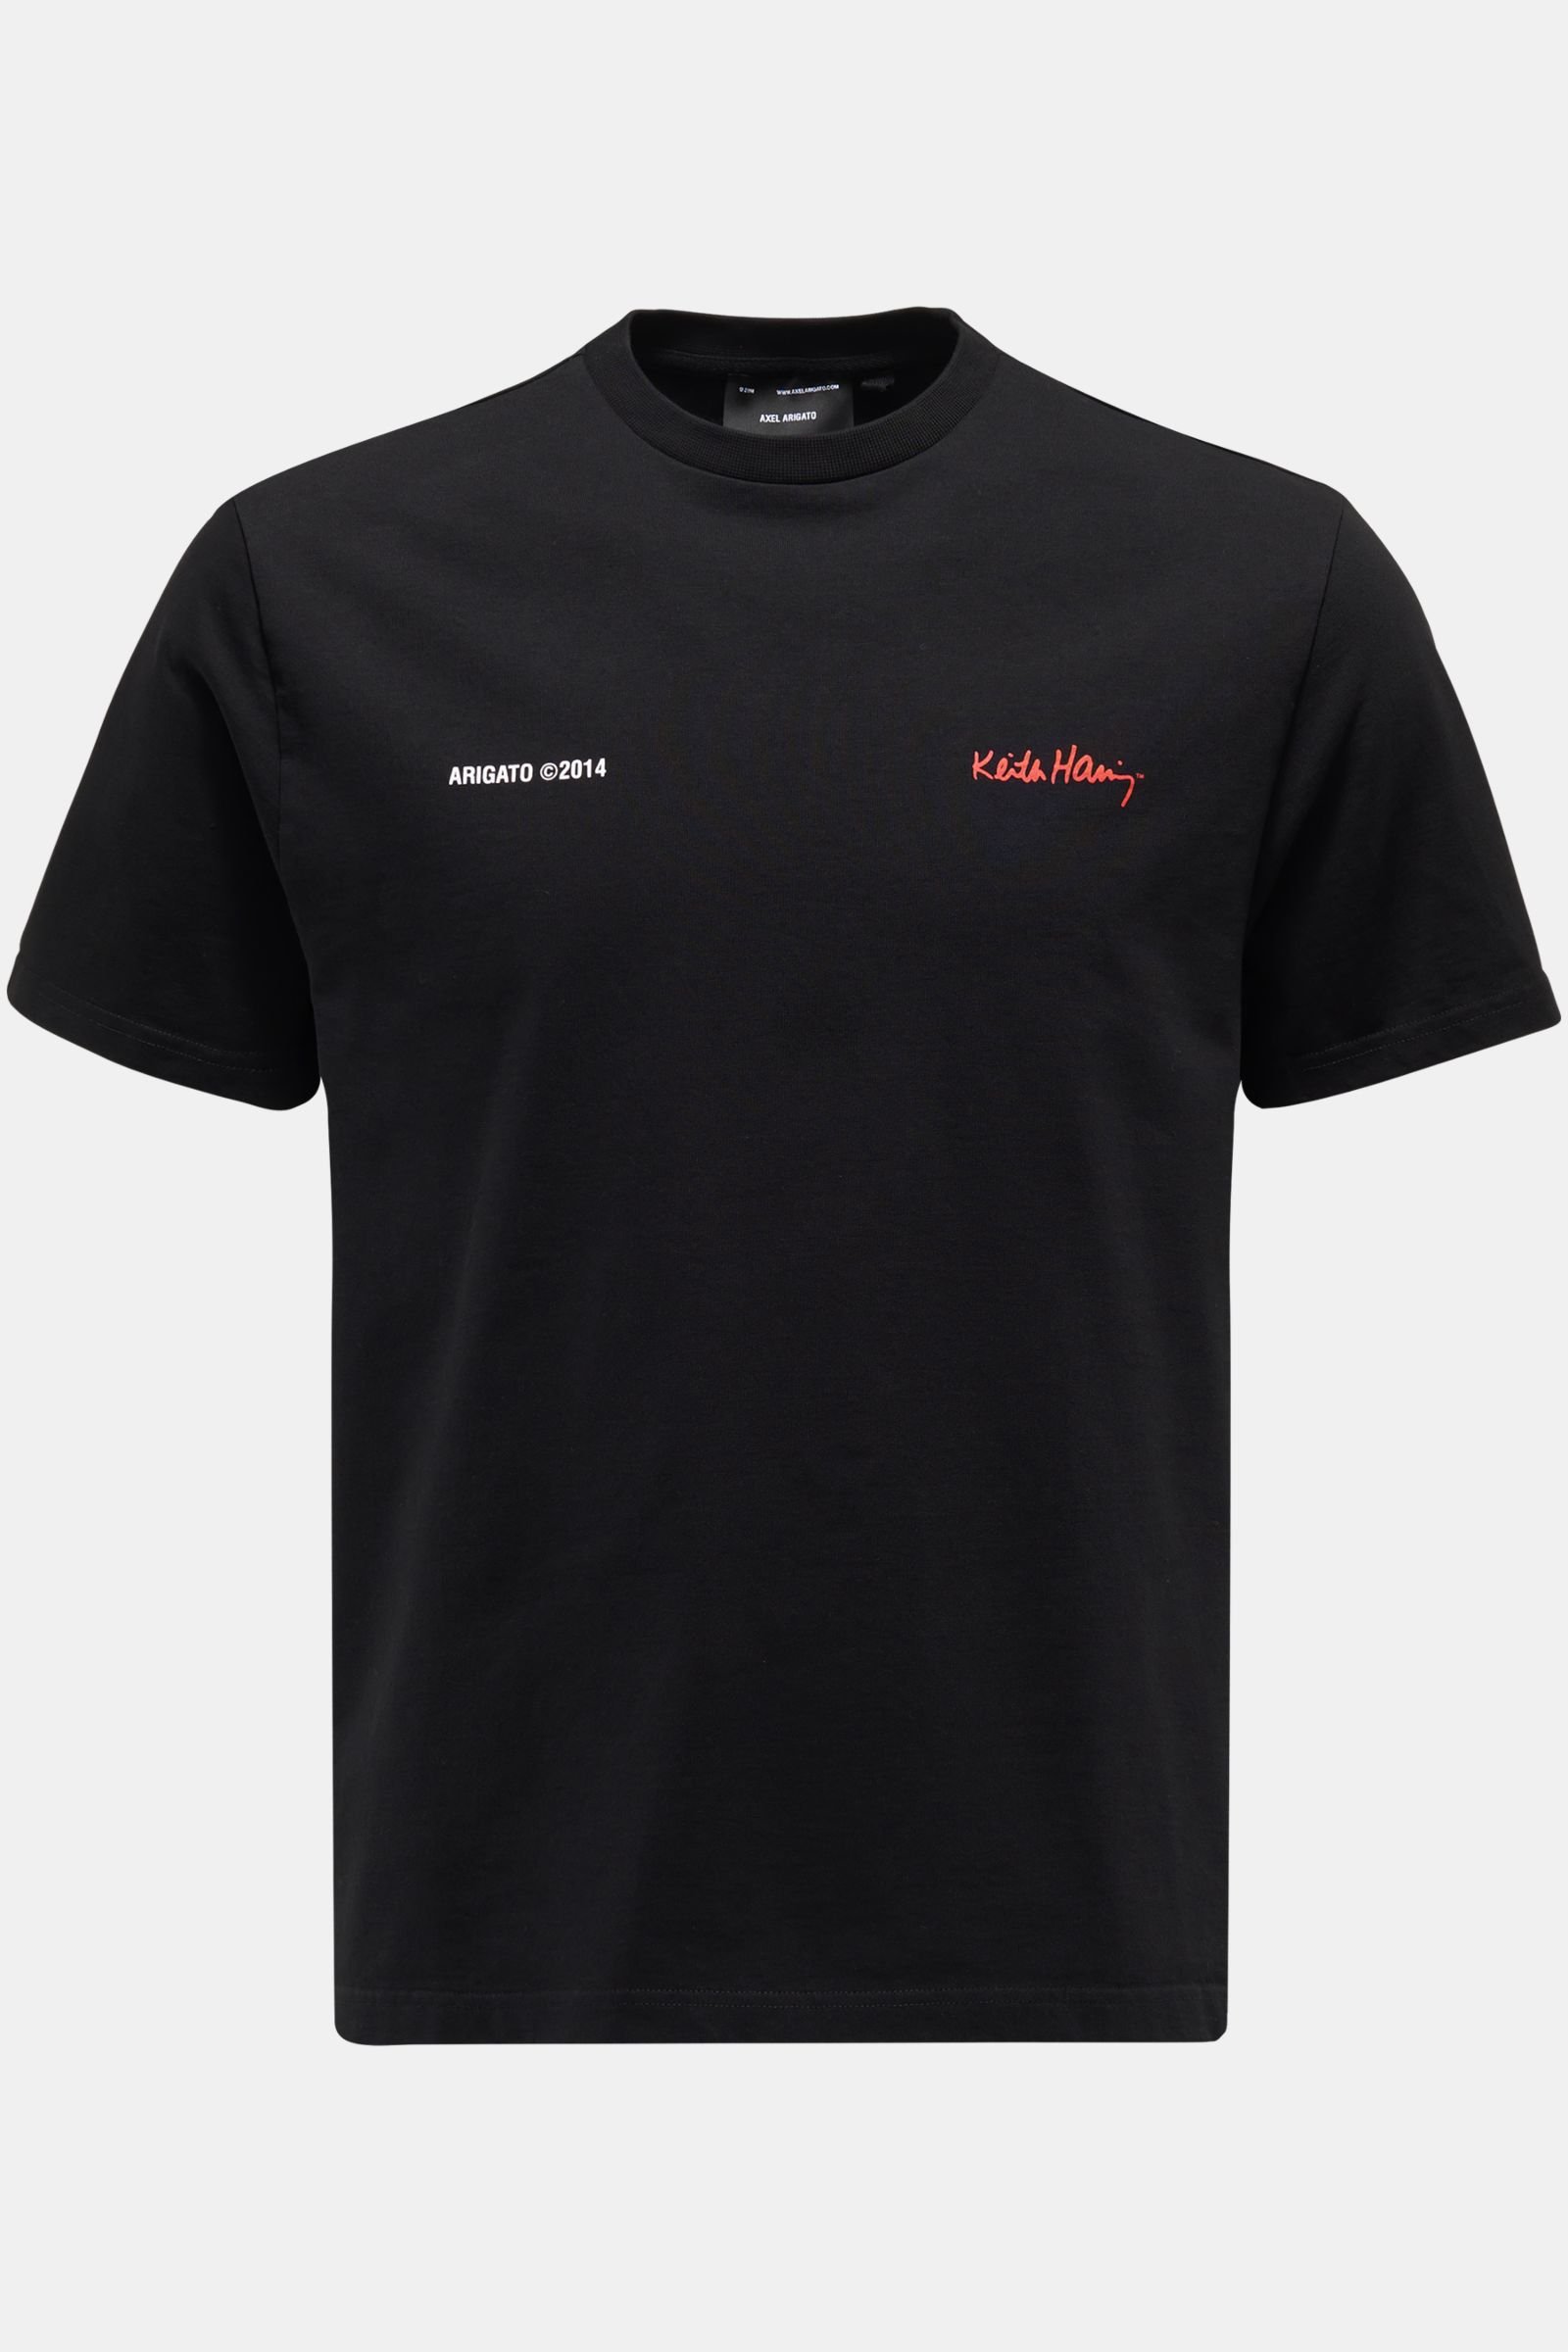 Crew neck T-shirt 'Keith Haring' black